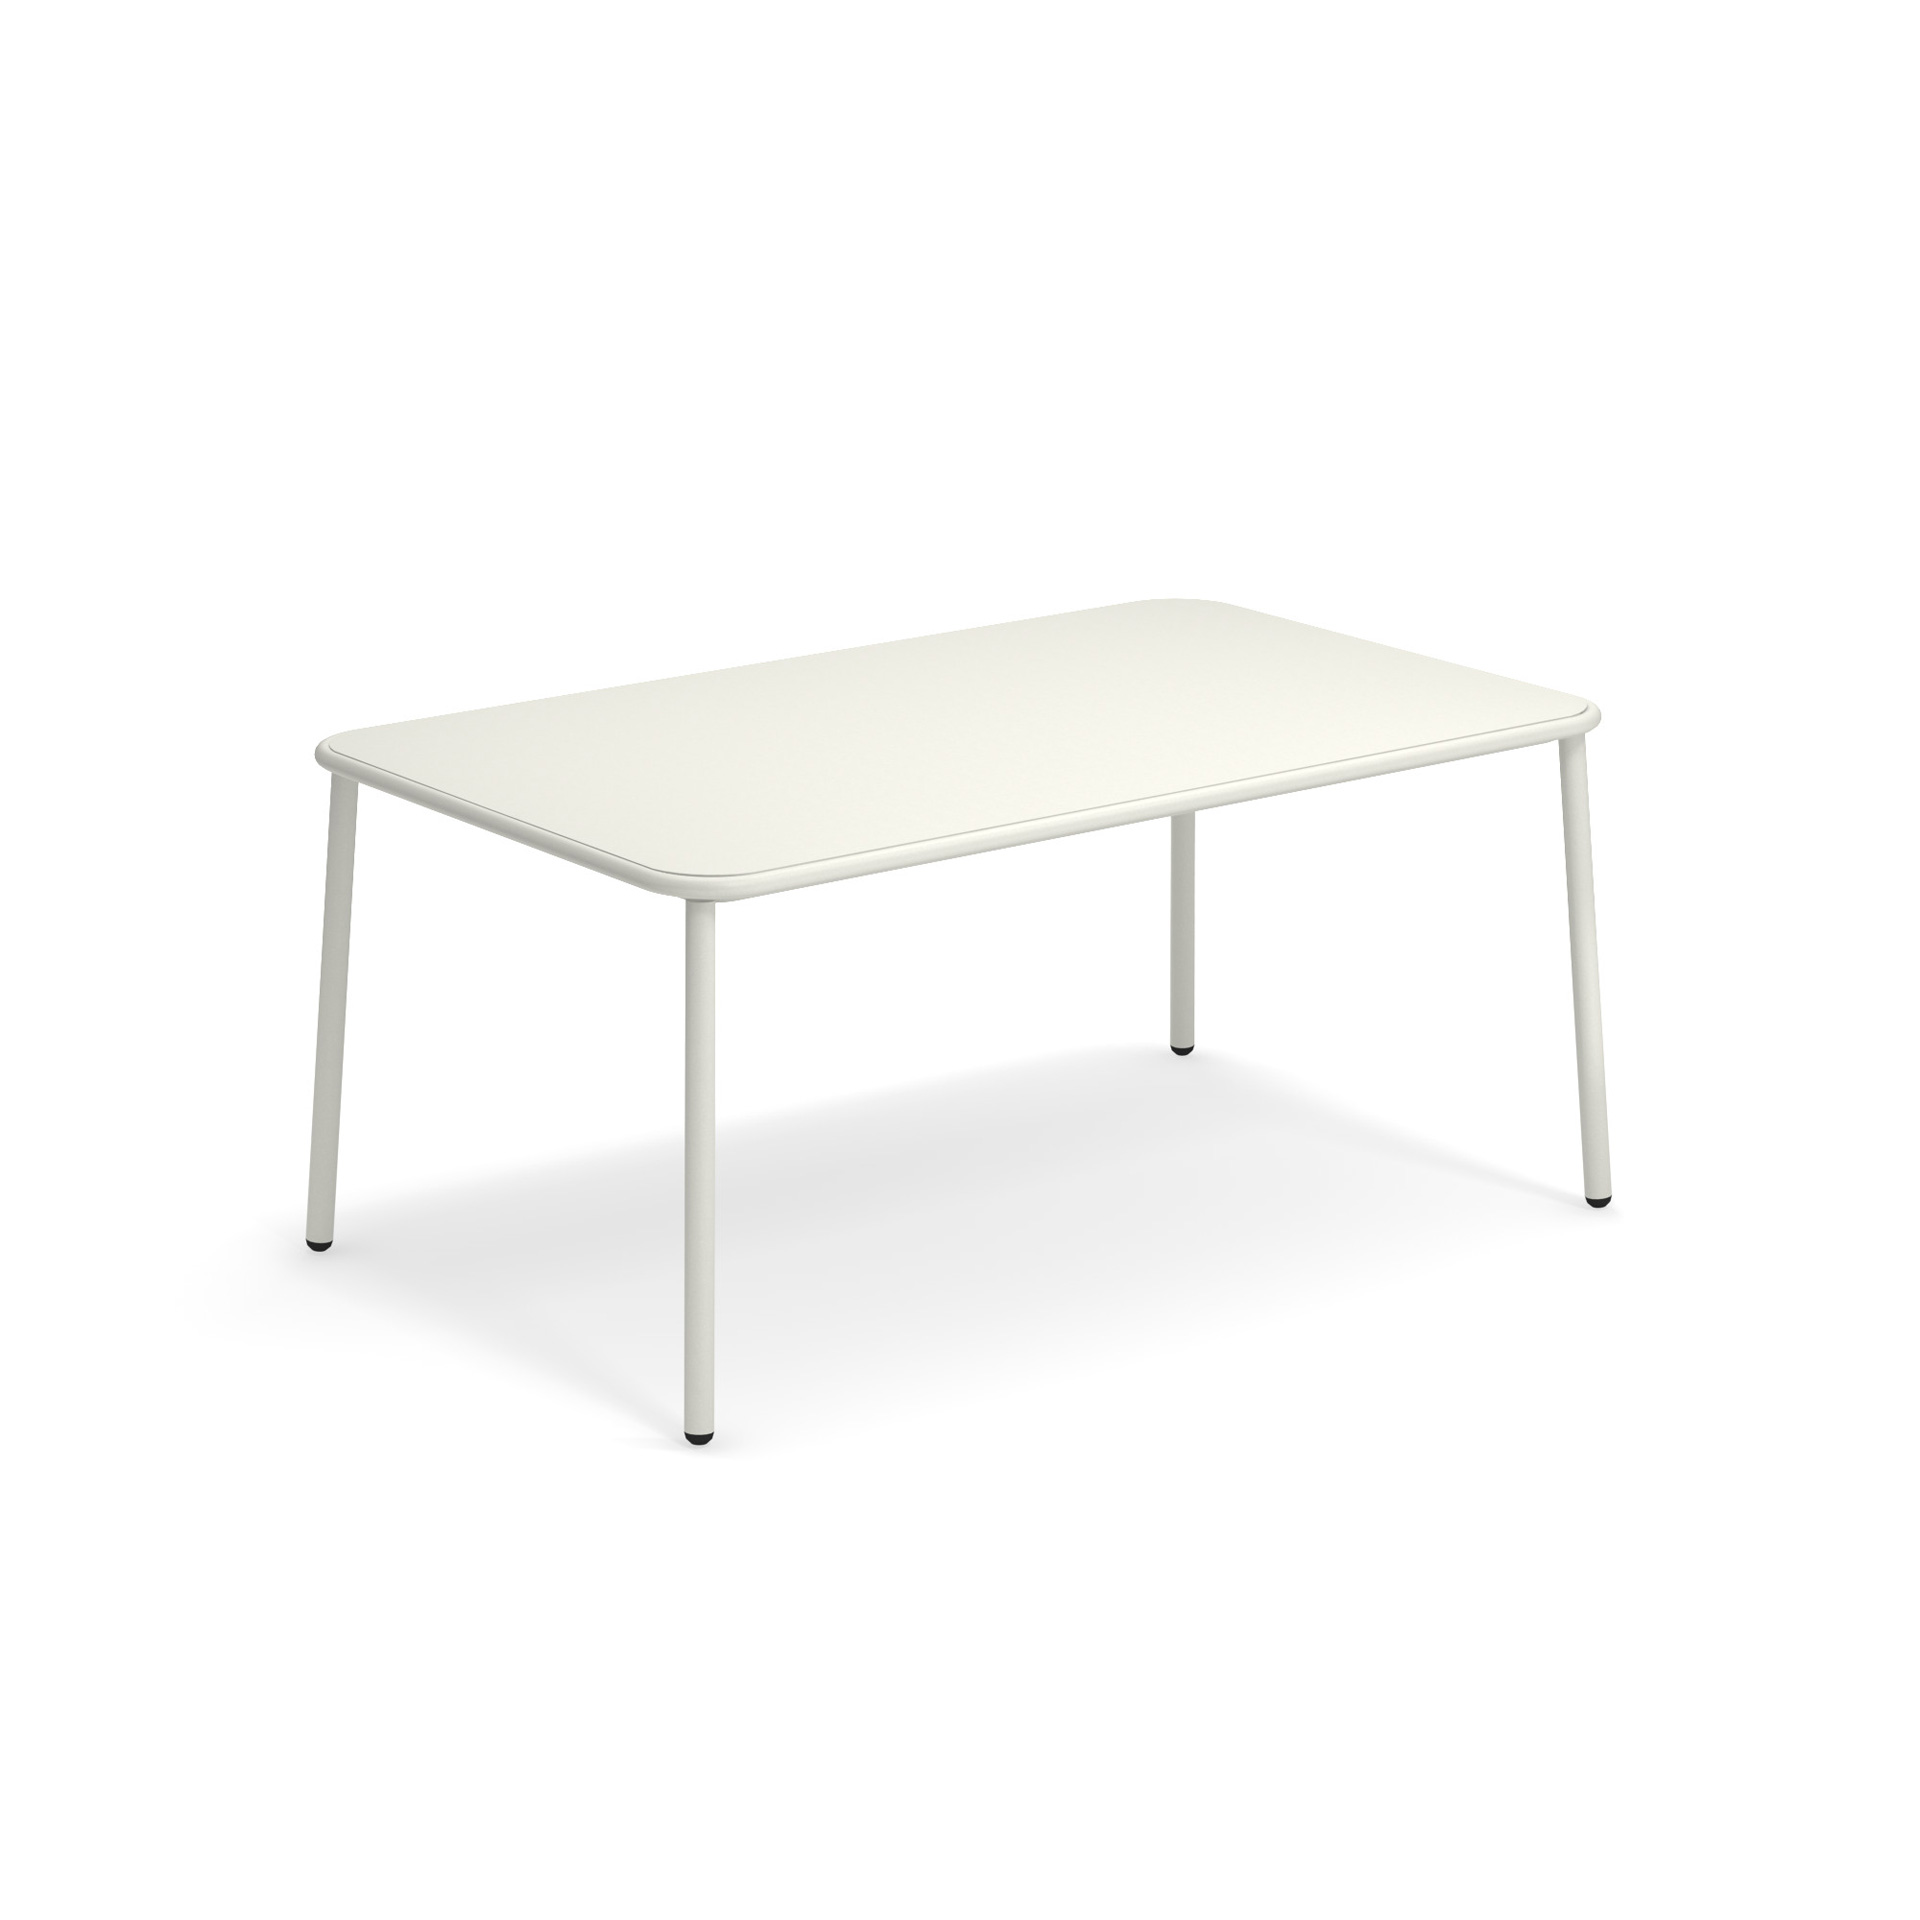 Yard rechteckiger Tisch mit Aluminiumplatte